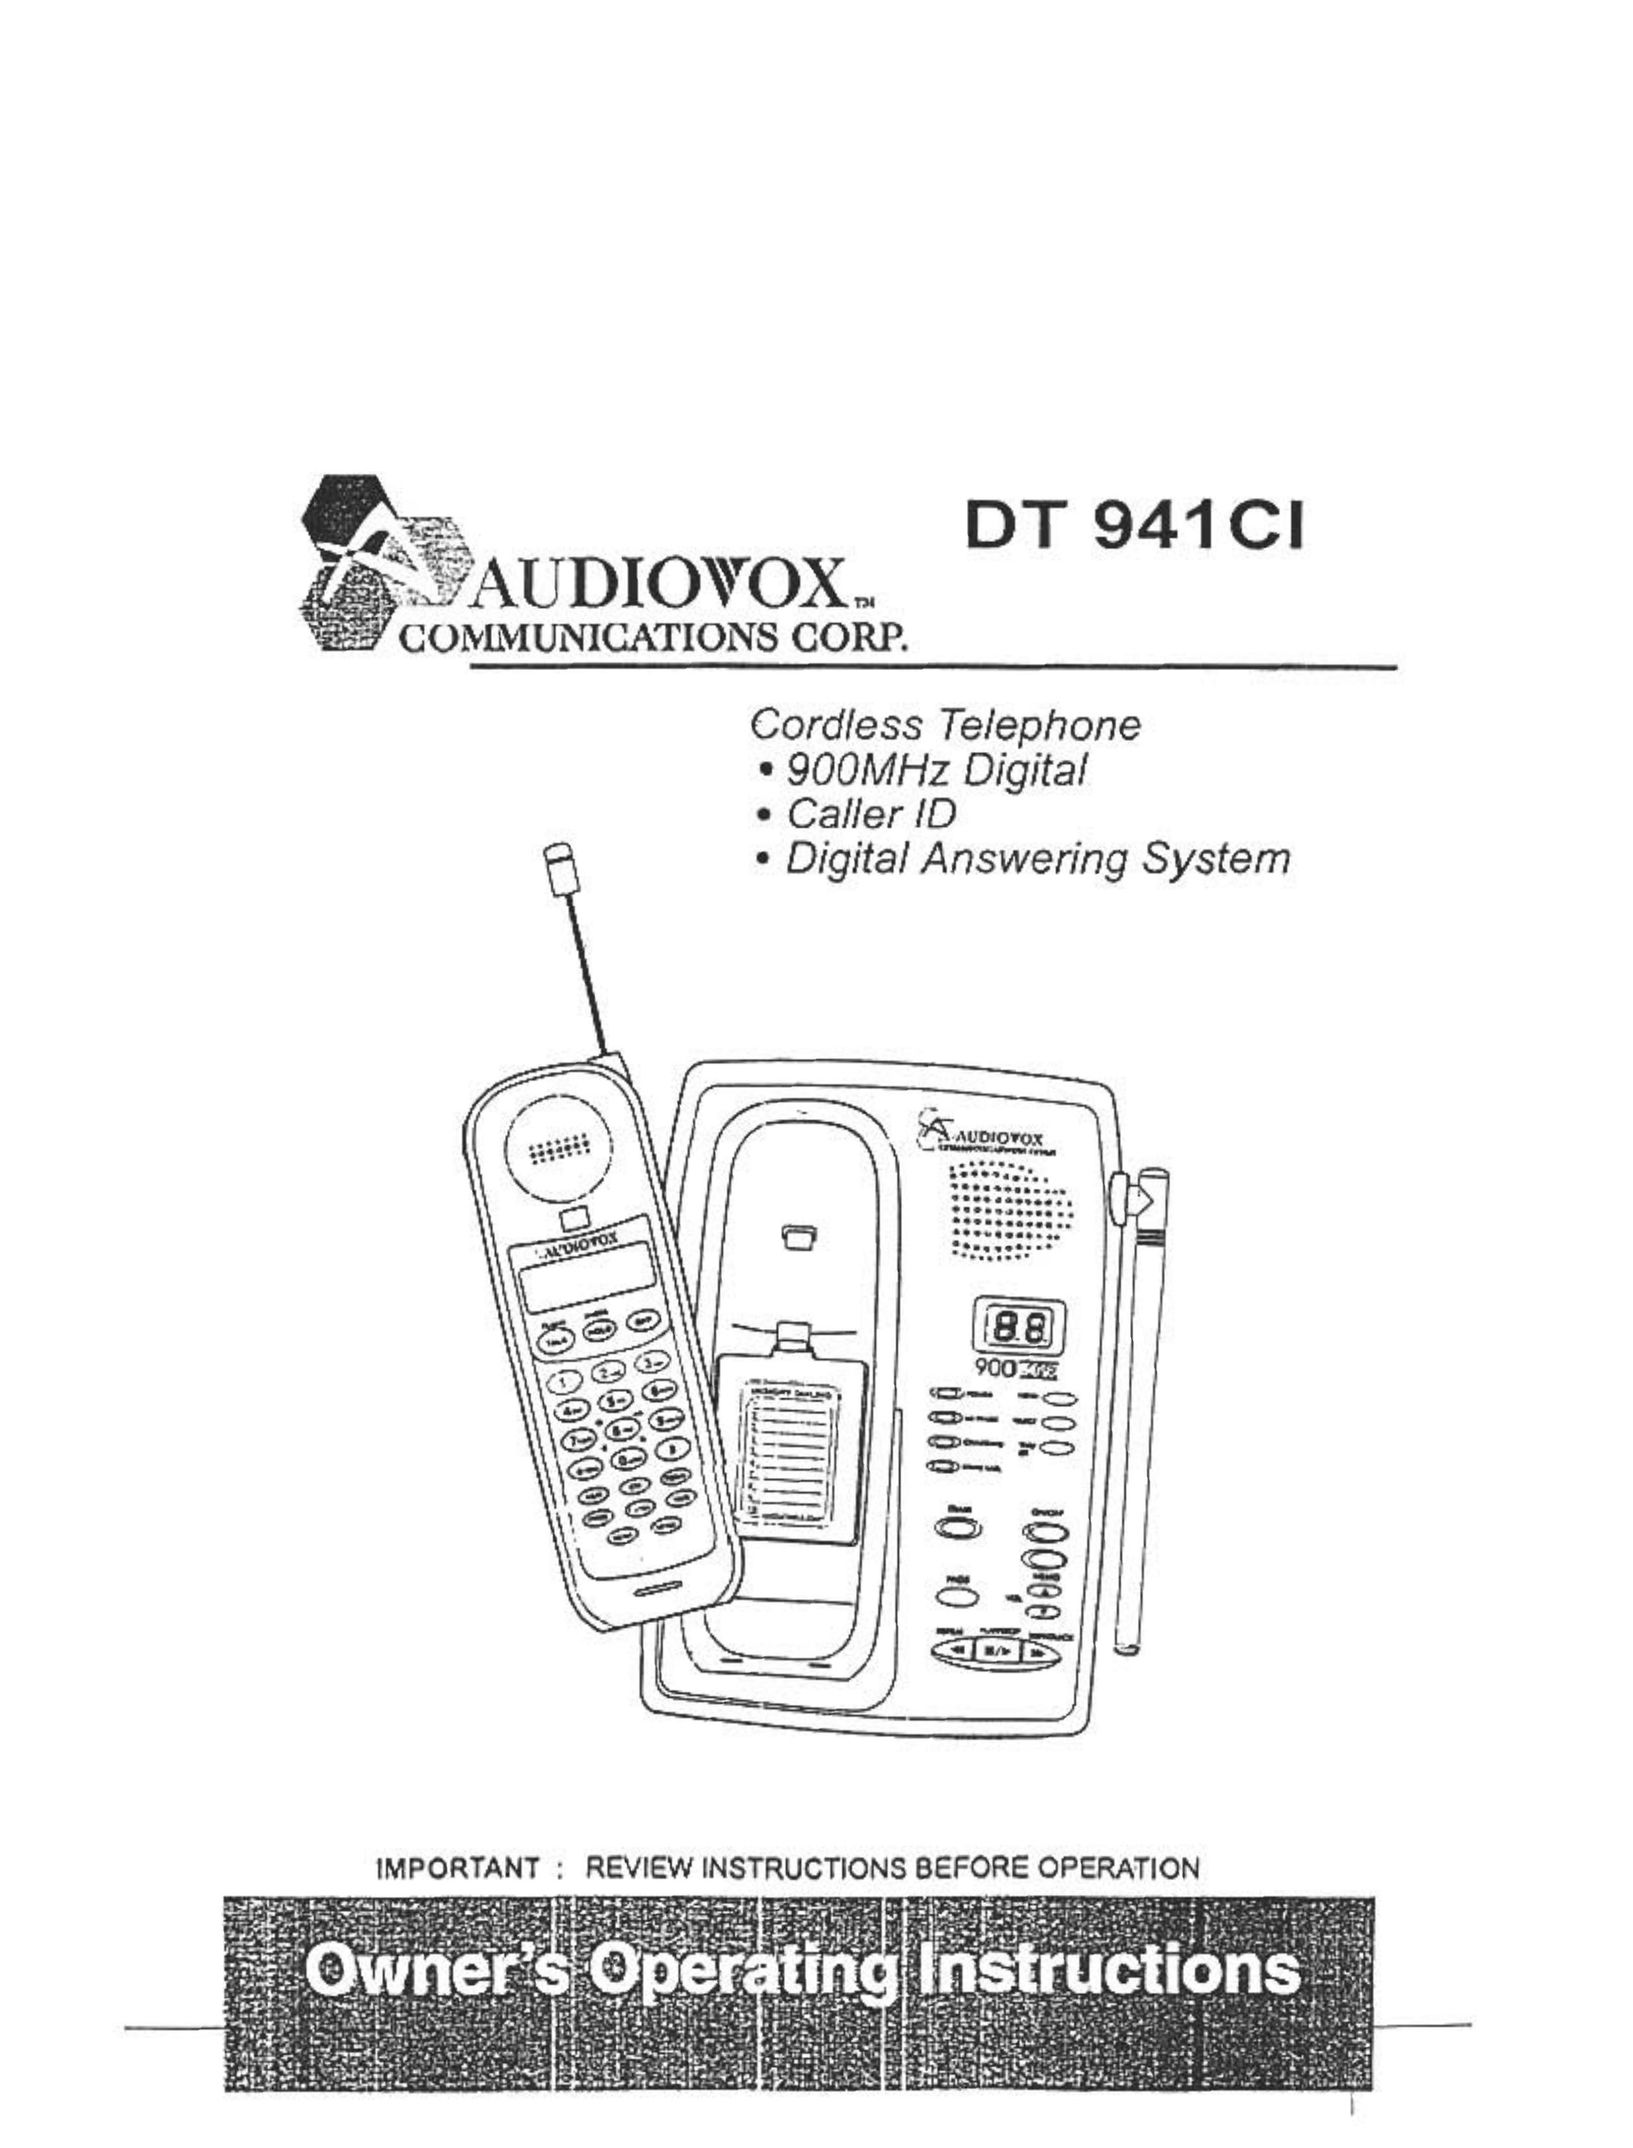 Audiovox DT 941 CI Answering Machine User Manual